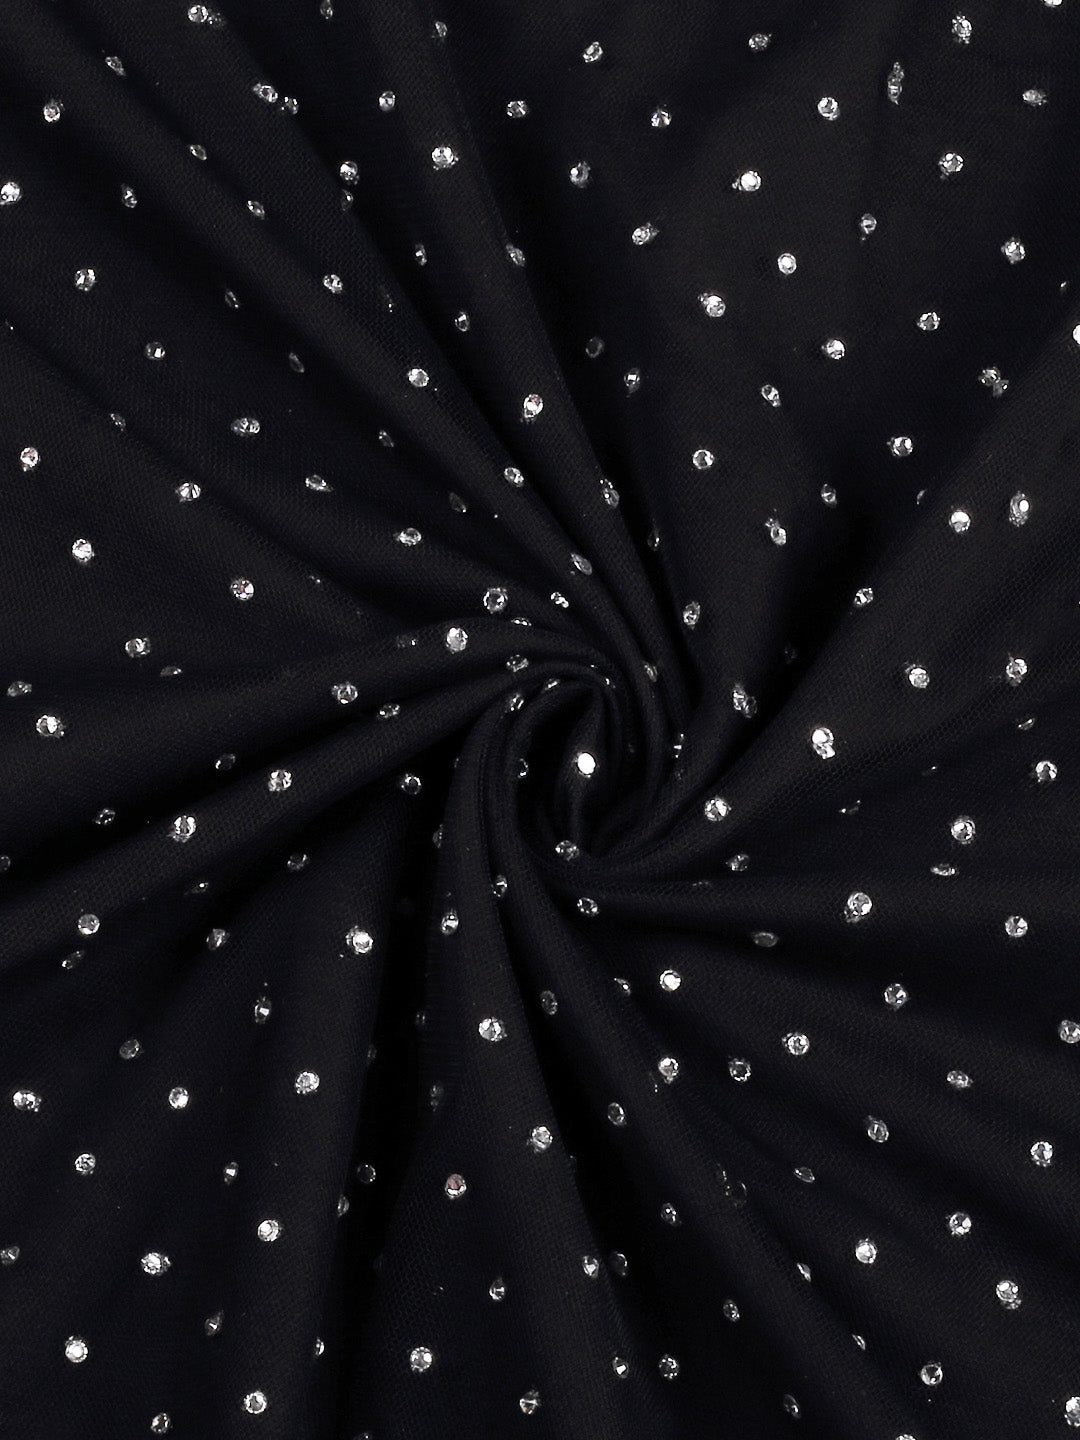 Black Net Fabric With Stonework